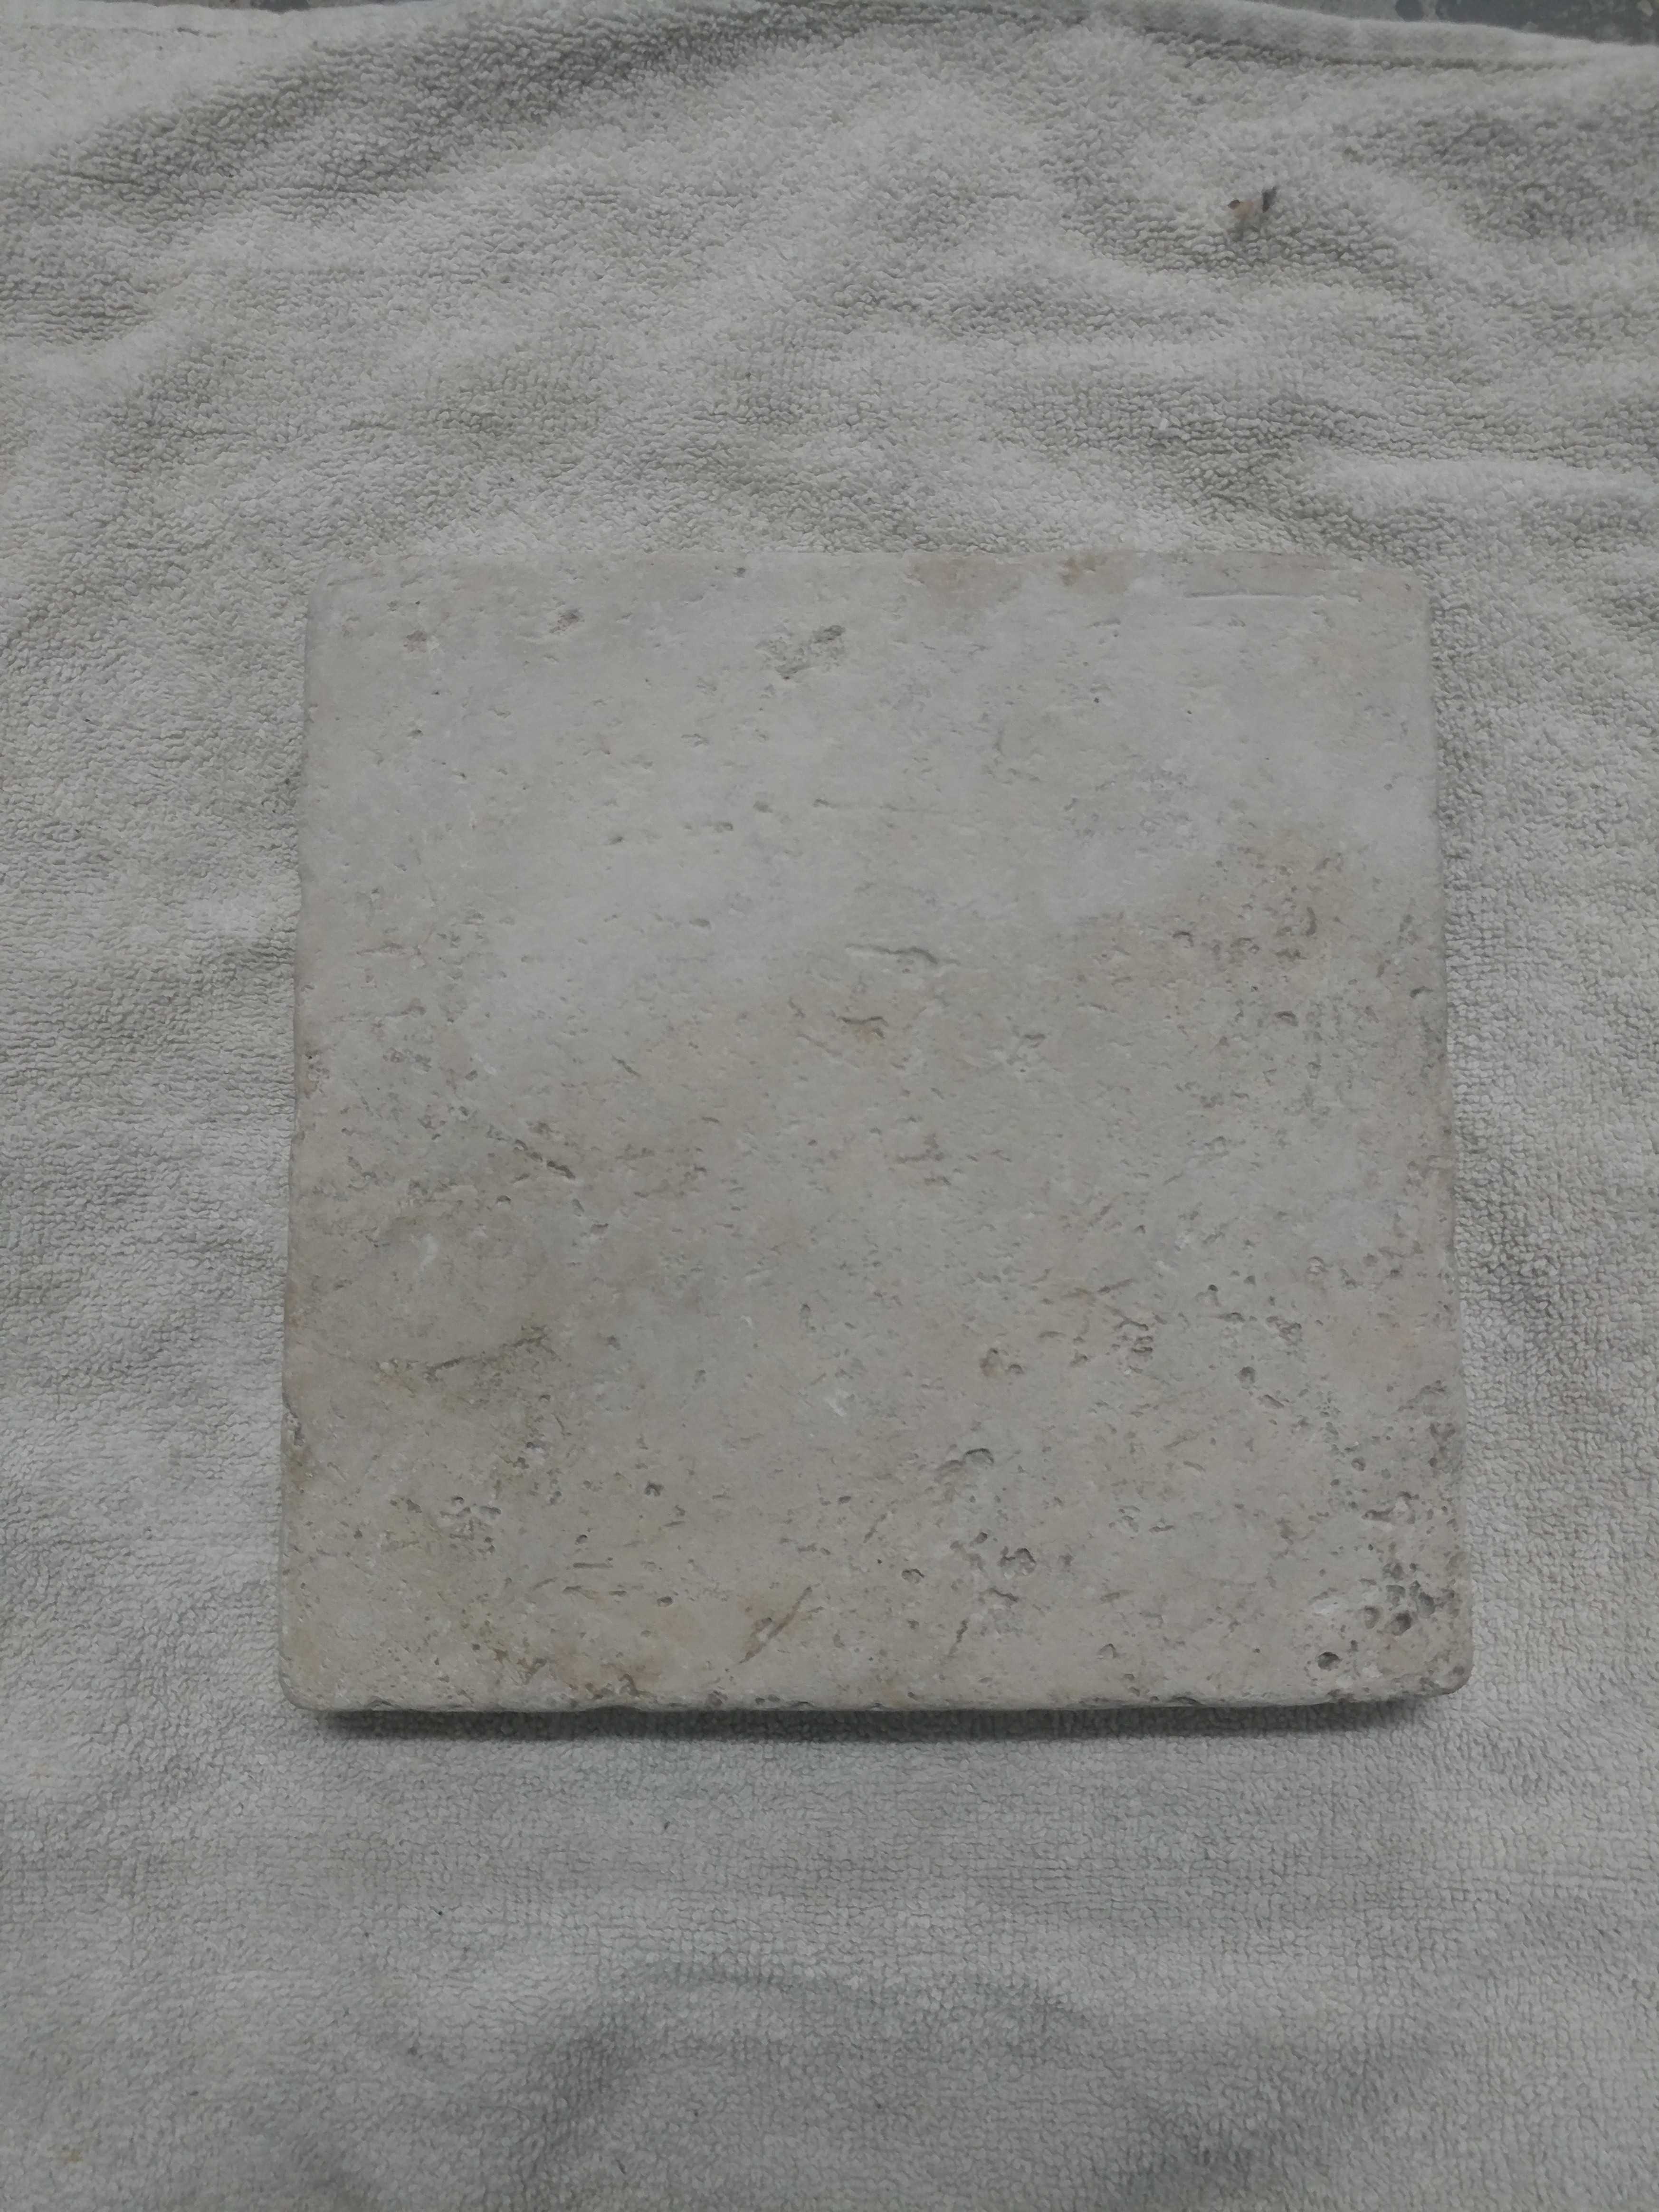 Dull Limestone Tile Before Color Sealing Application